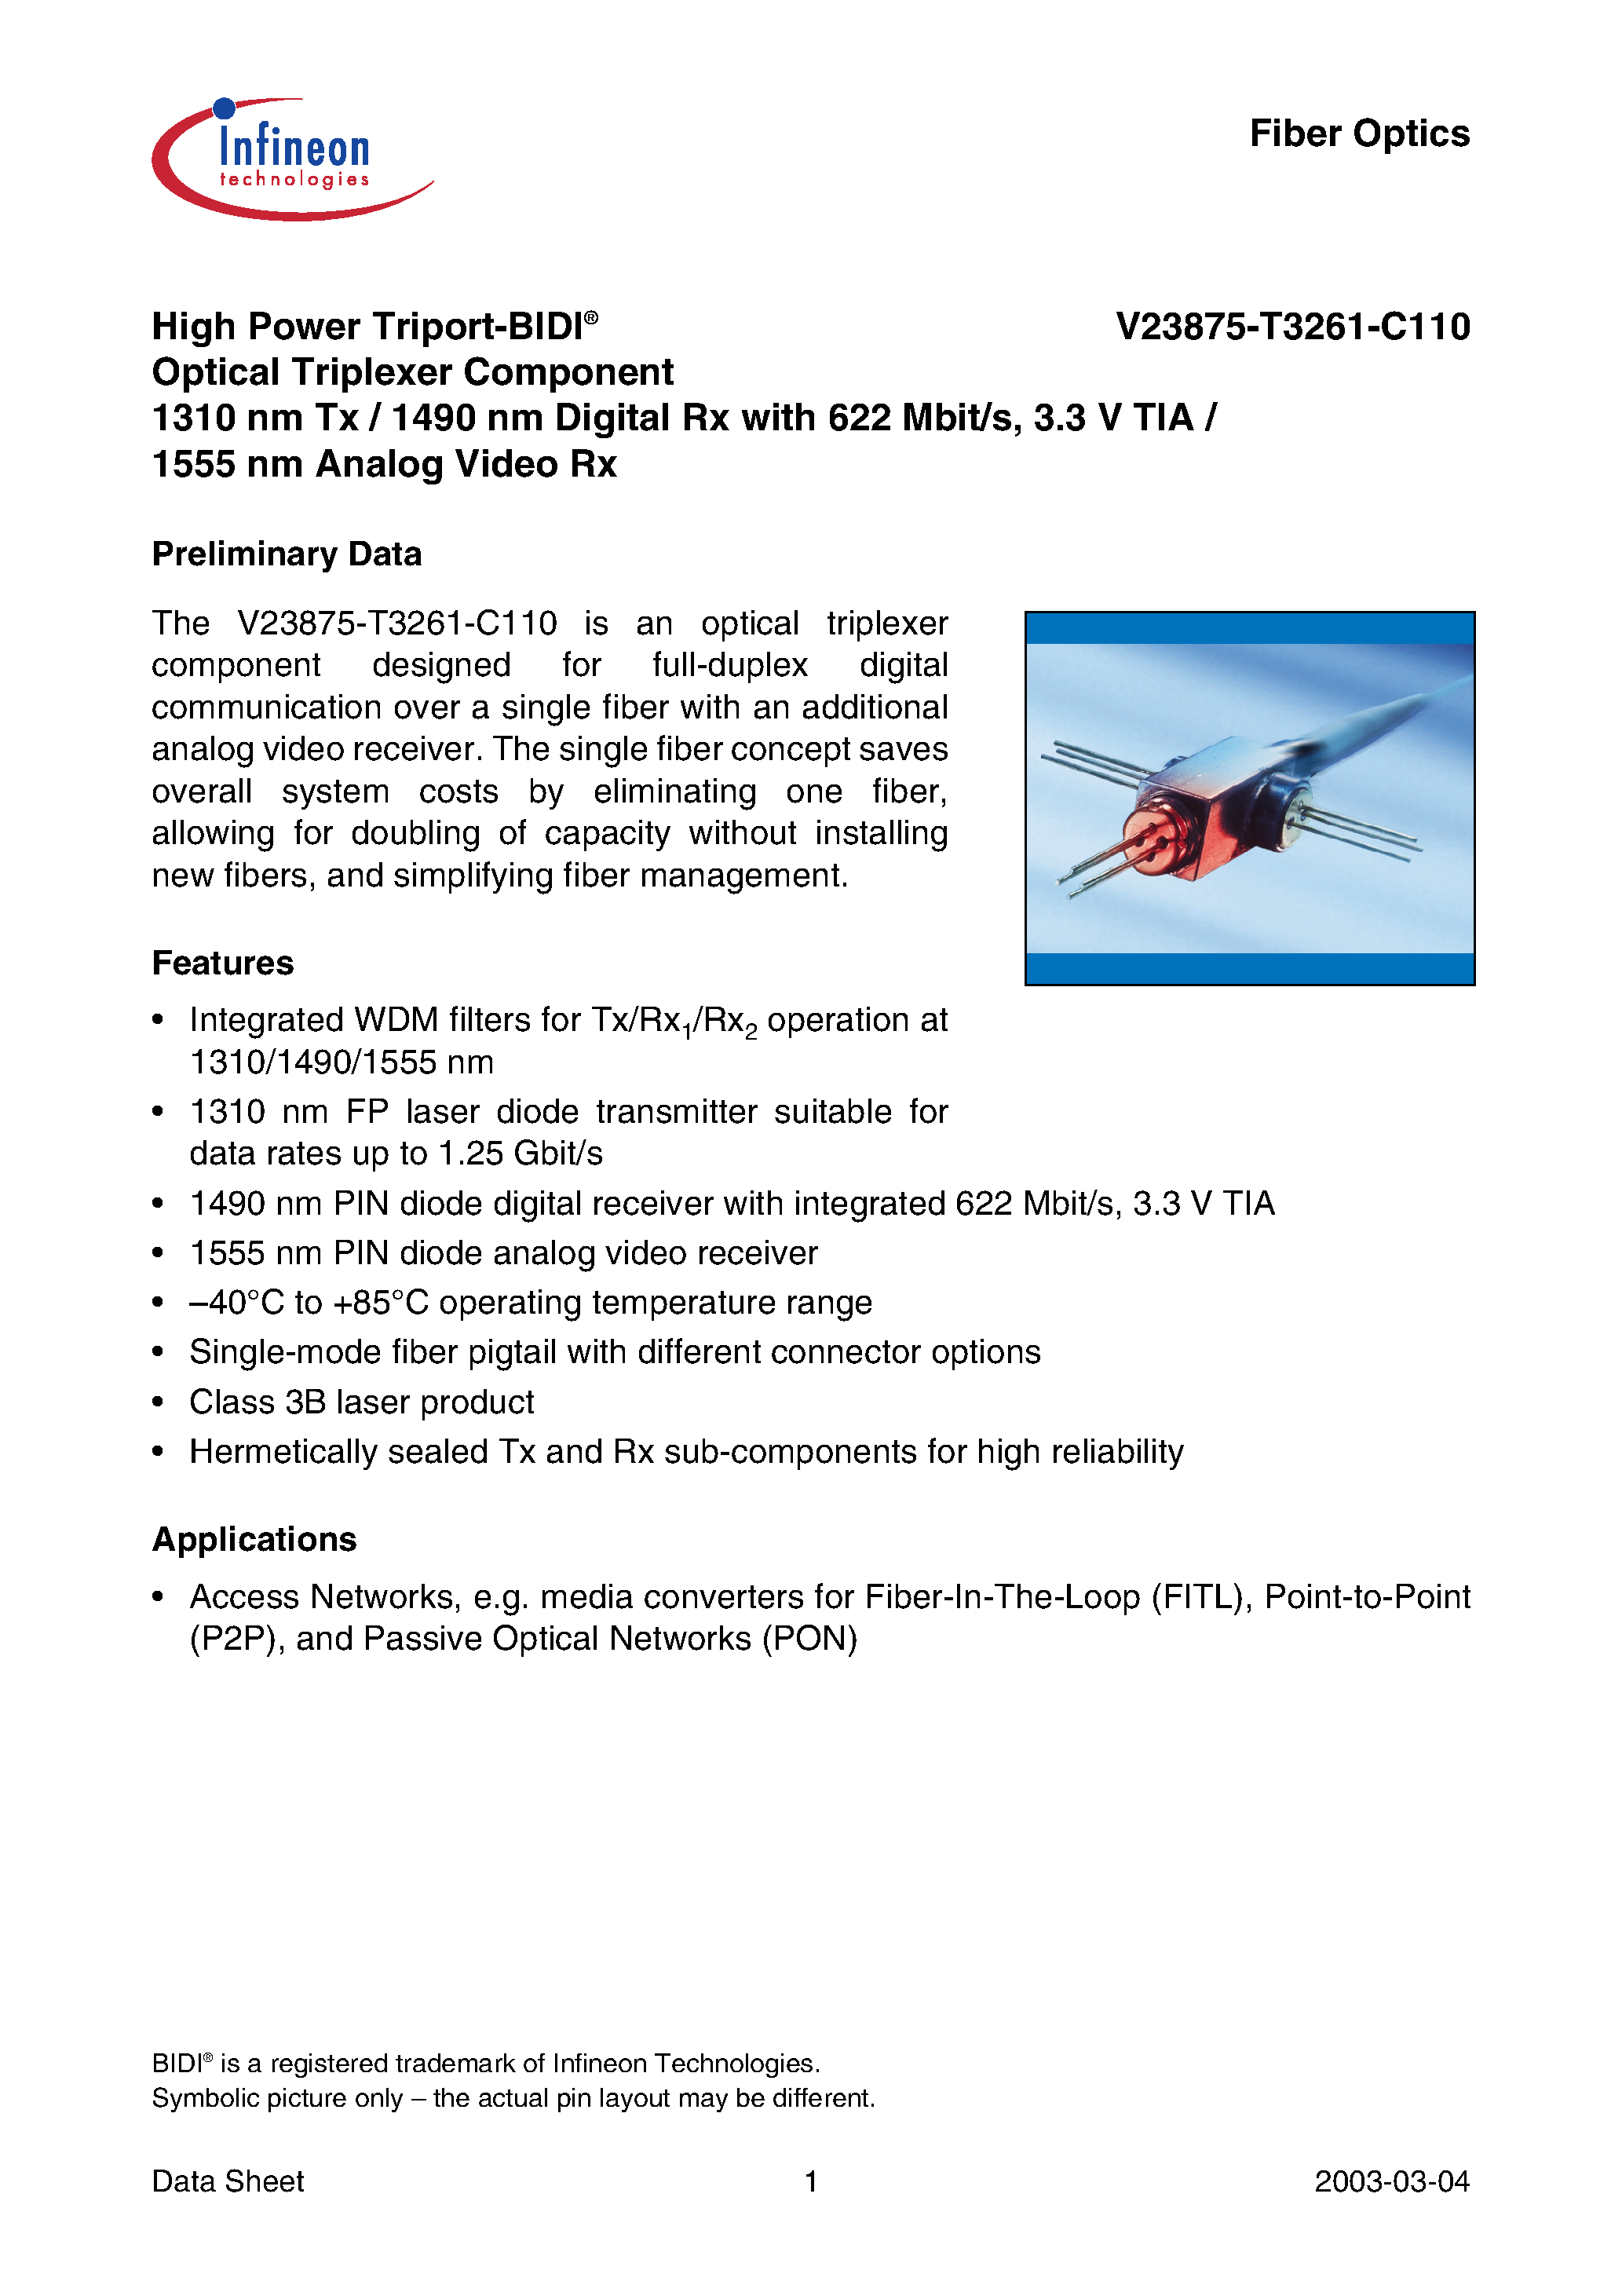 Datasheet V23875-T3261-C110 - High Power Triport-BIDI Optical Triplexer Component 1310 nm Tx / 1490 nm Digital Rx with 622 Mbit/s/ 3.3 V TIA /1555 nm Analog Video Rx page 1